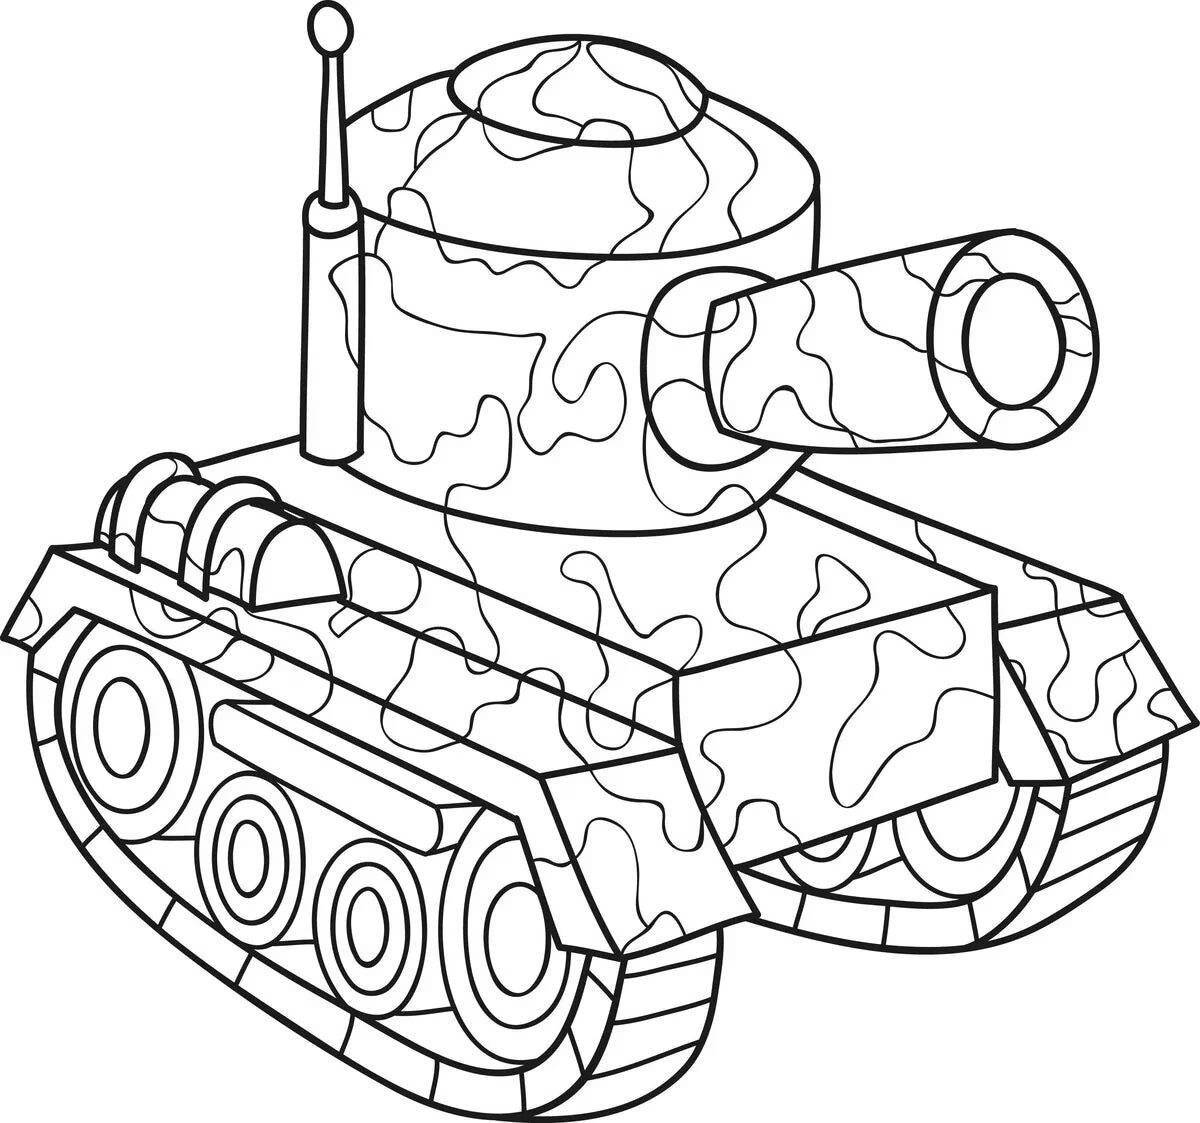 Impressive talking tank coloring page